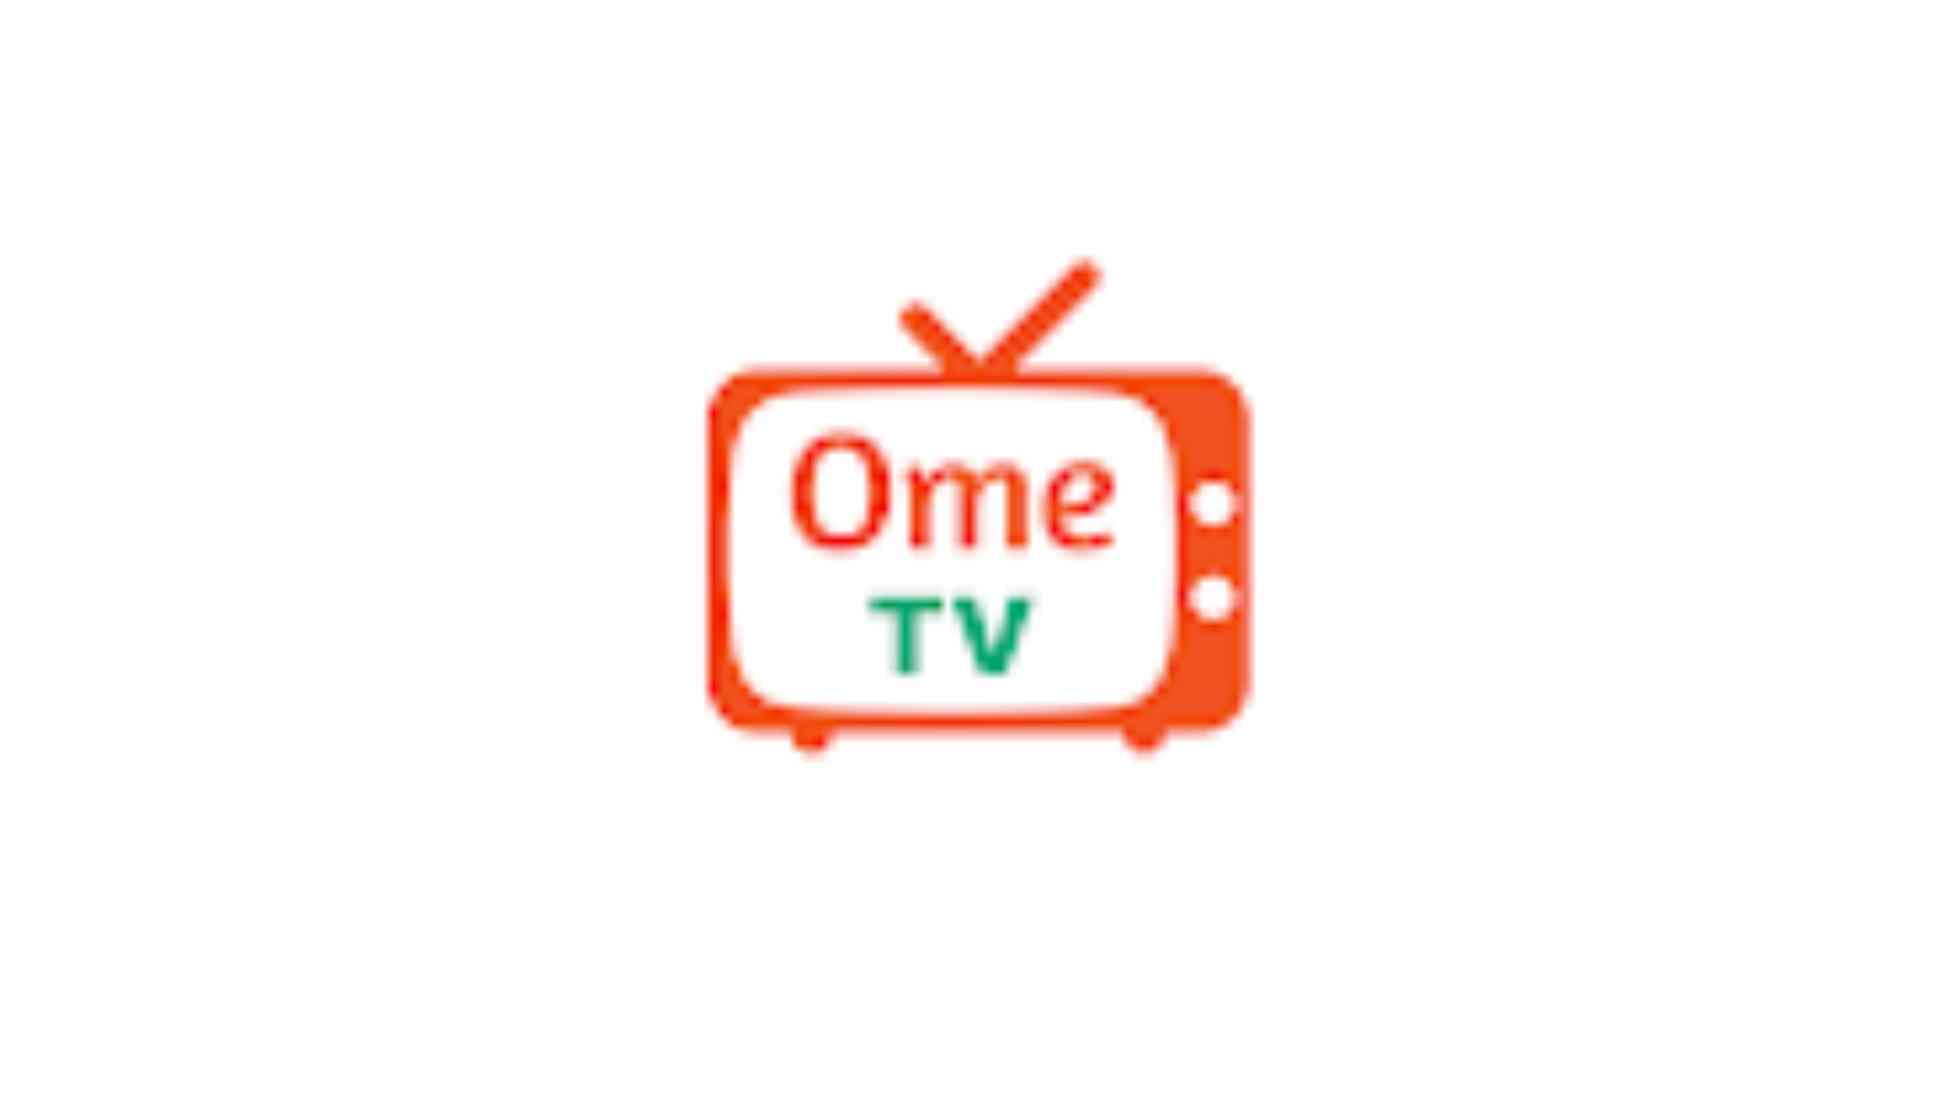 Ometv.com